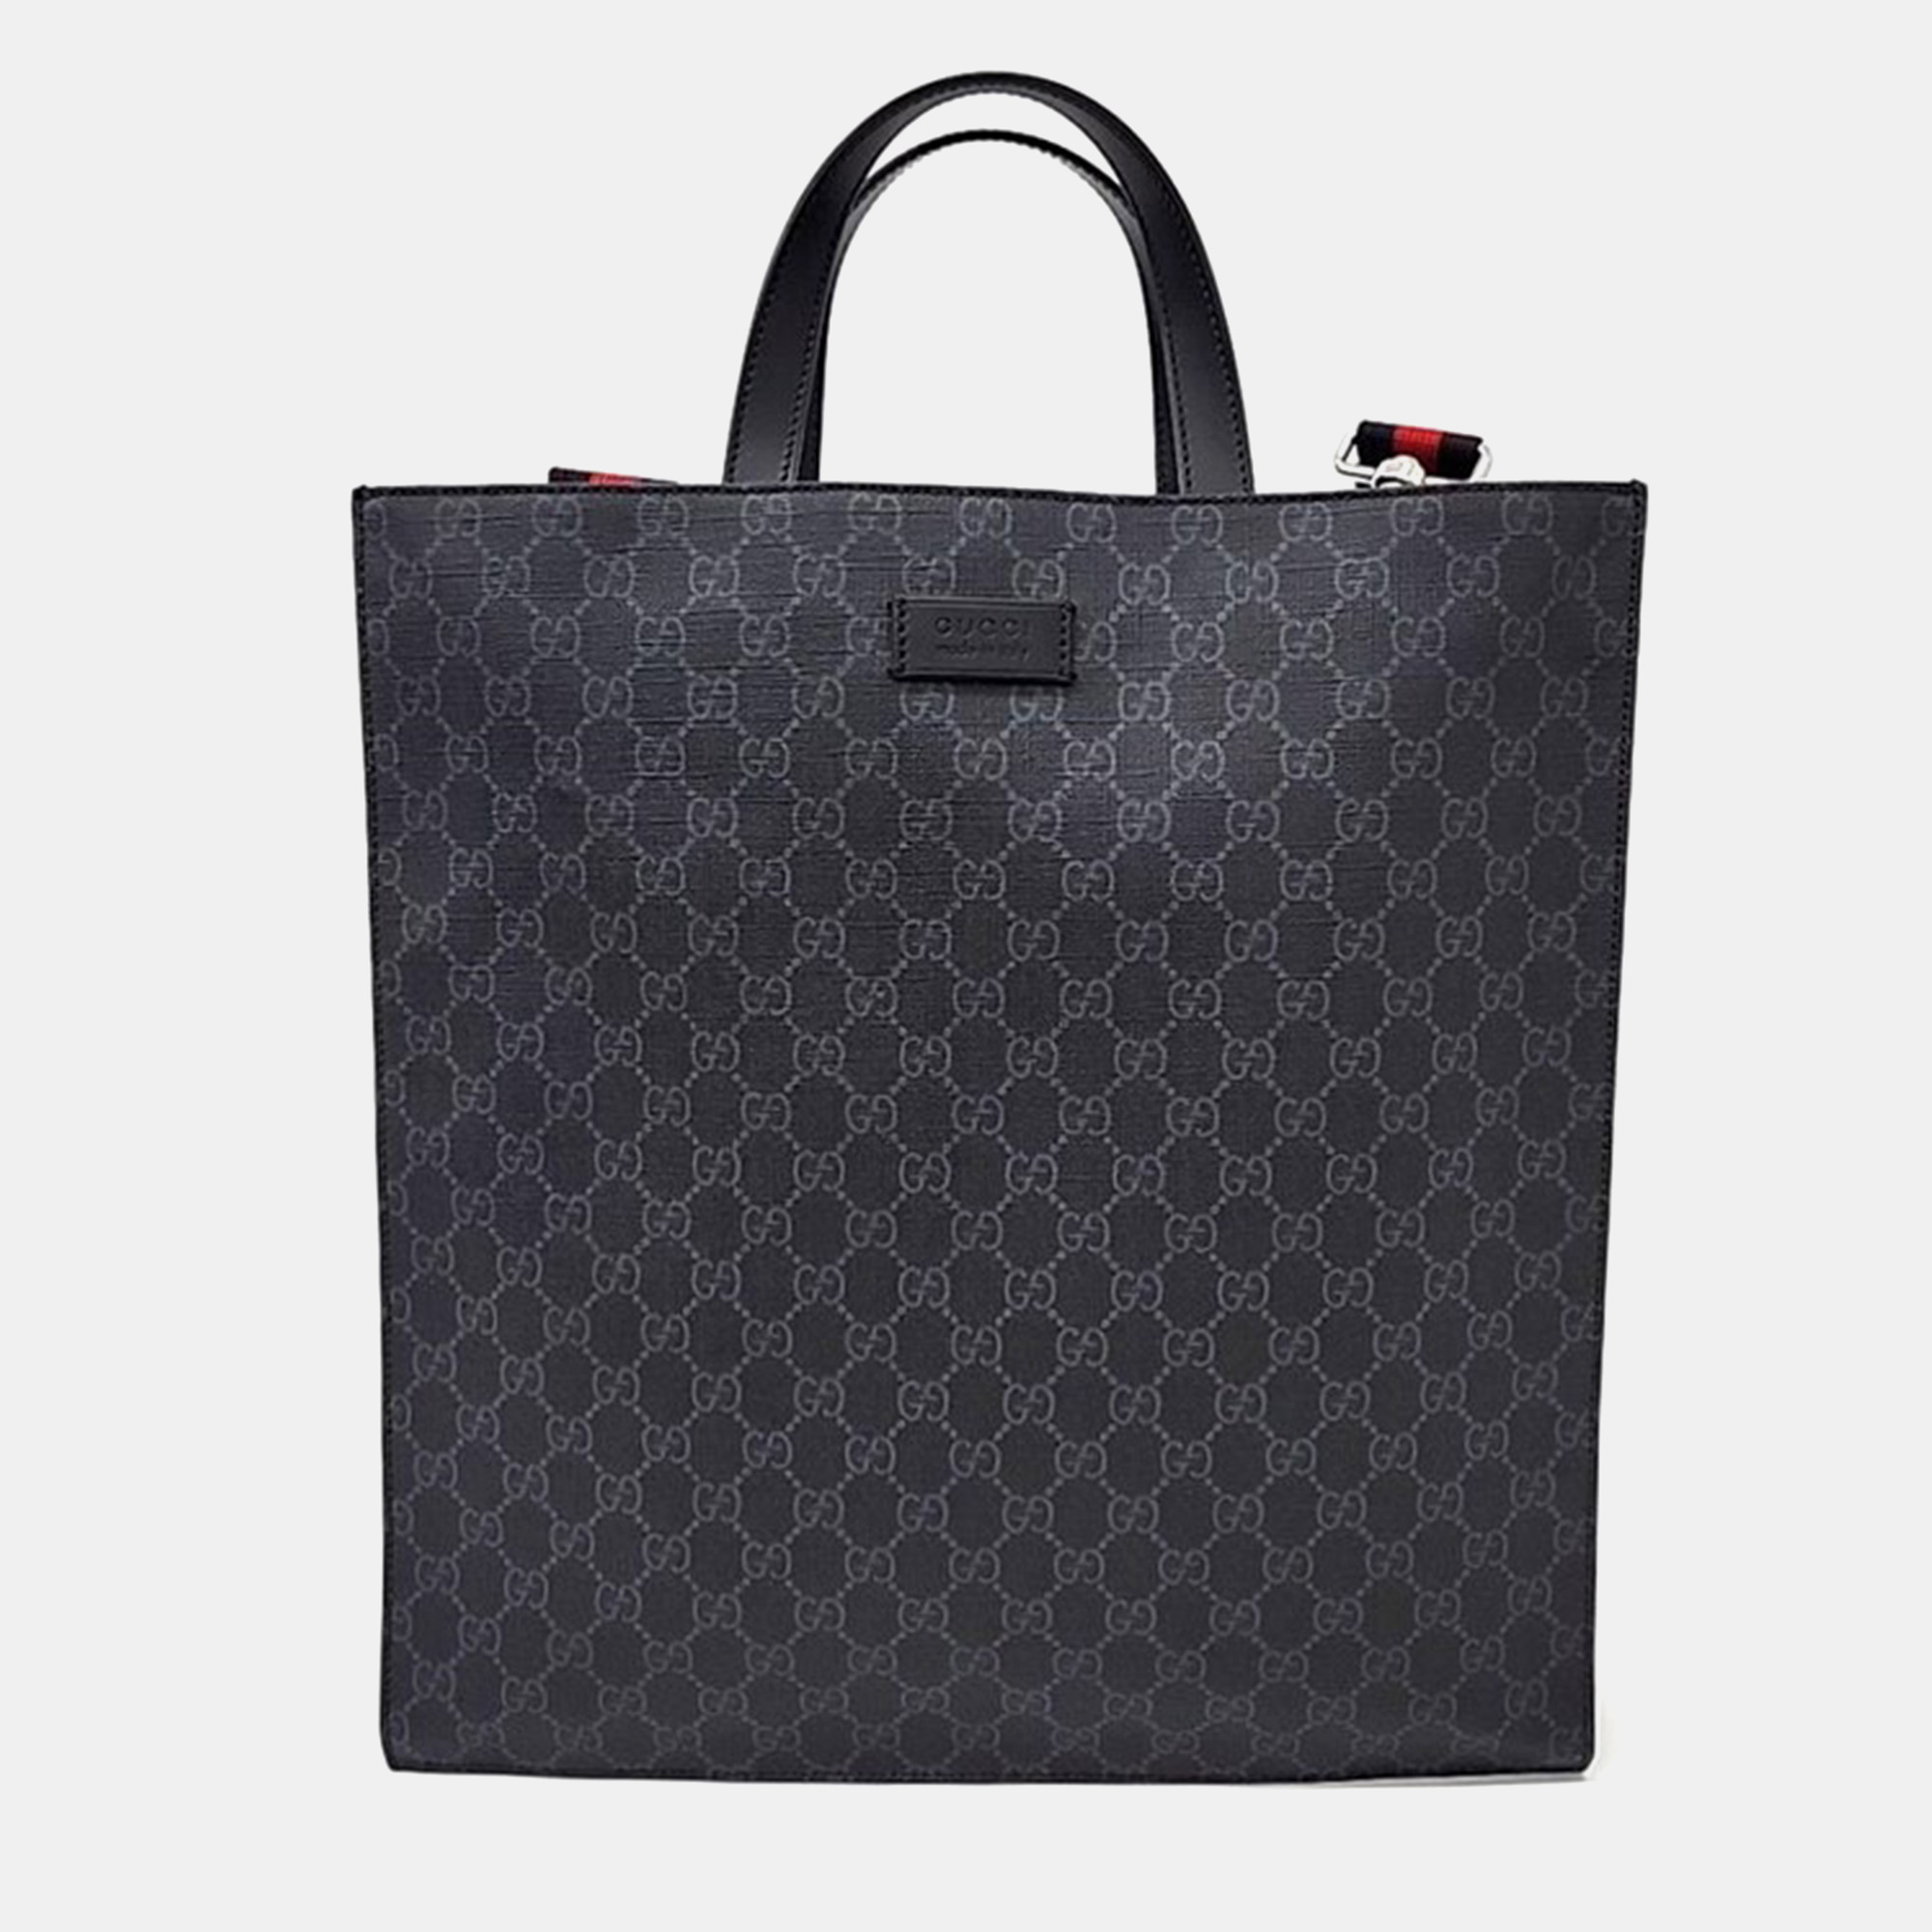 Gucci soft gg supreme tote and shoulder bag